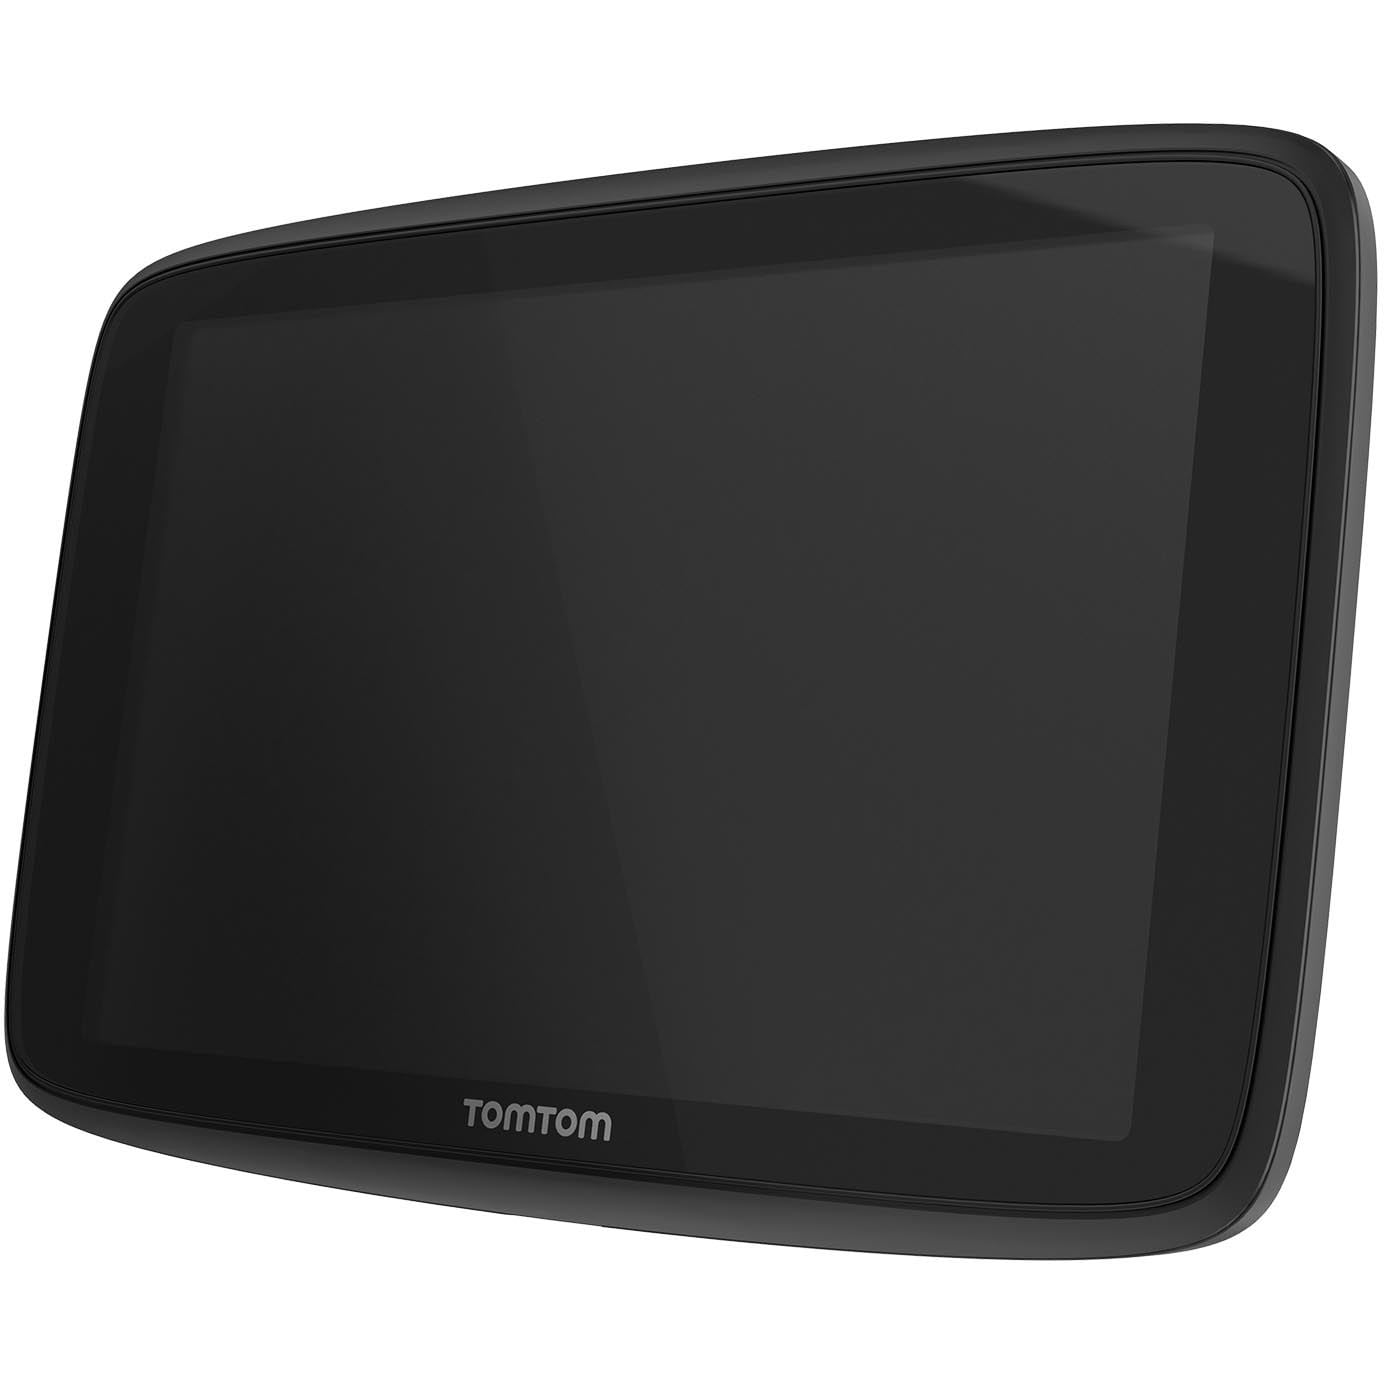 REP_11 Touchscreen Reparatur Navigation Tomtom GO 500 510 5000 5100 7250 5250 